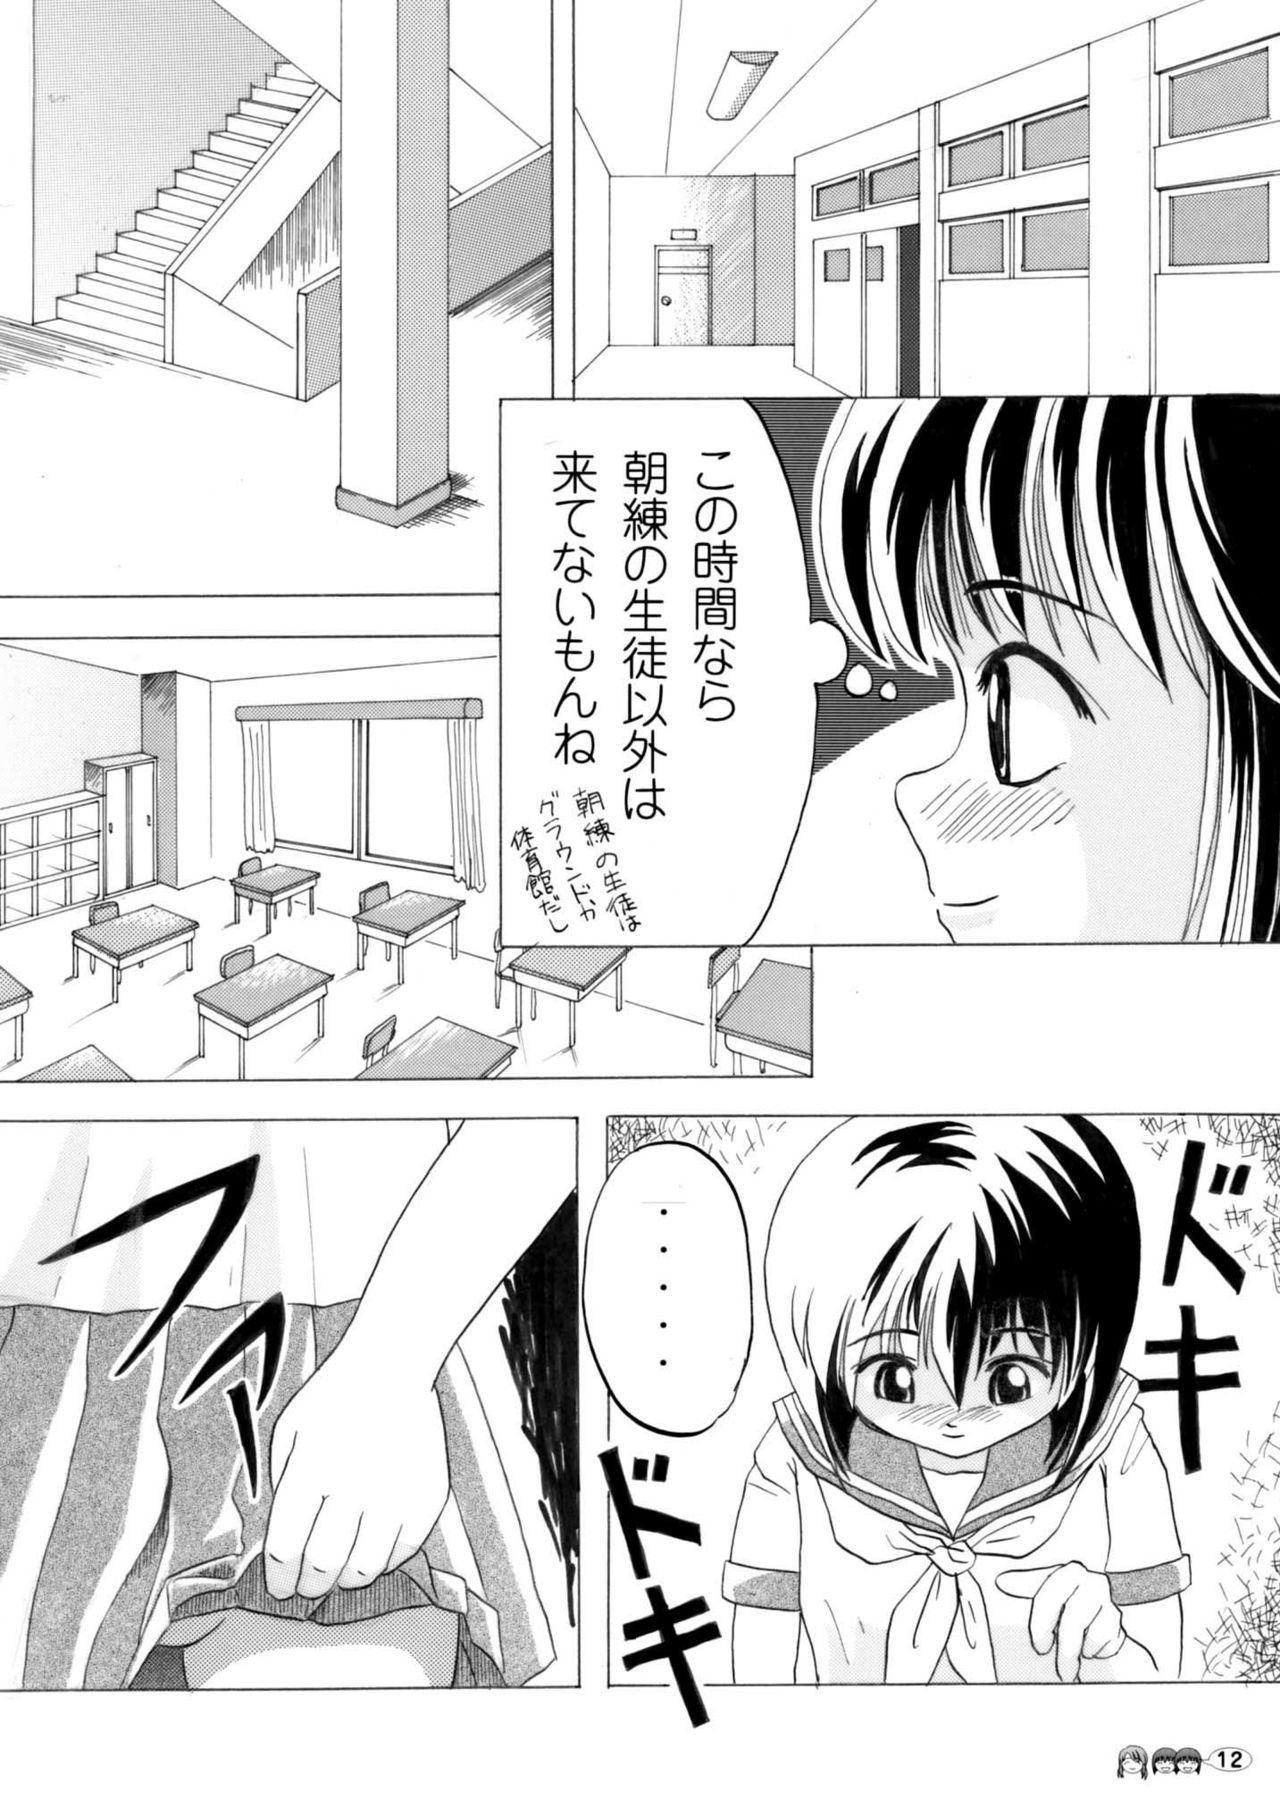 For Sachina no Koukou Nikki 1 - Original Alone - Page 11